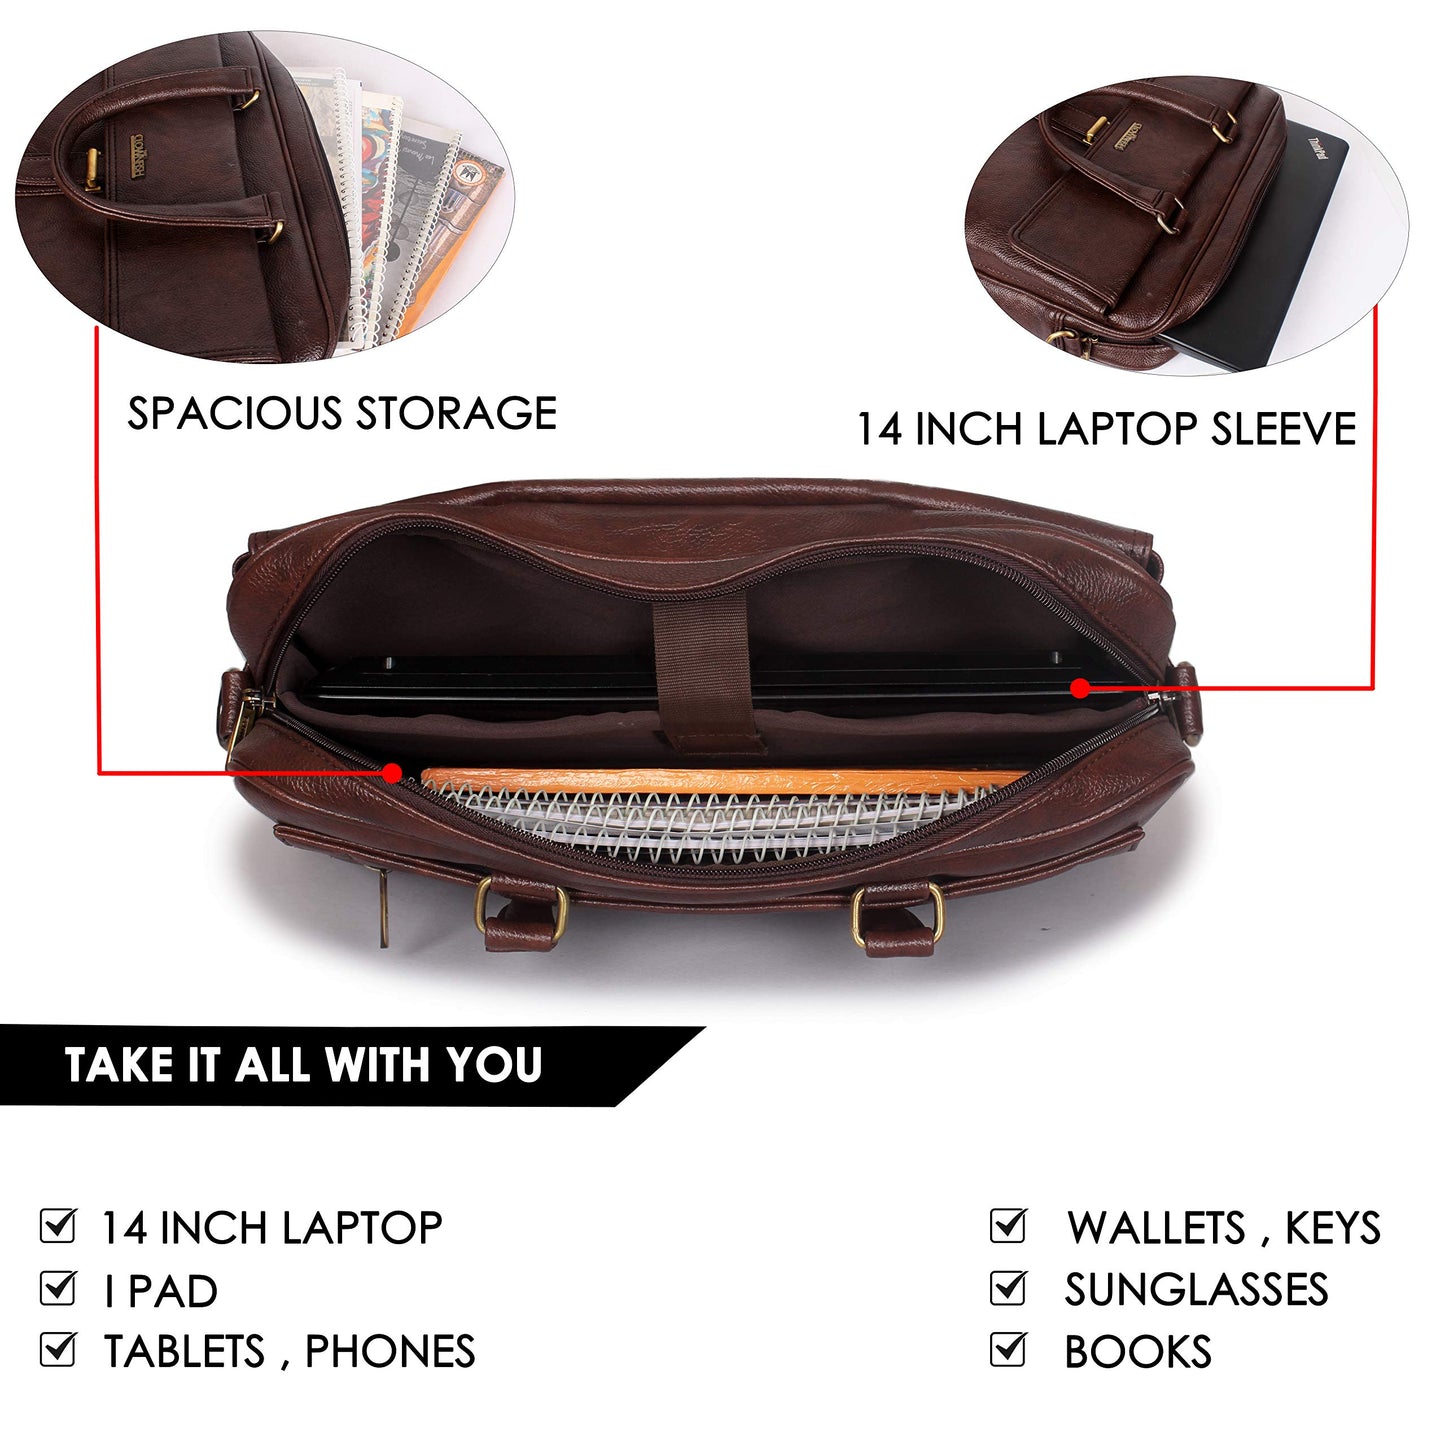 THE CLOWNFISH Vogue Laptop Messenger Bag for 14 inch laptops - Dark Brown